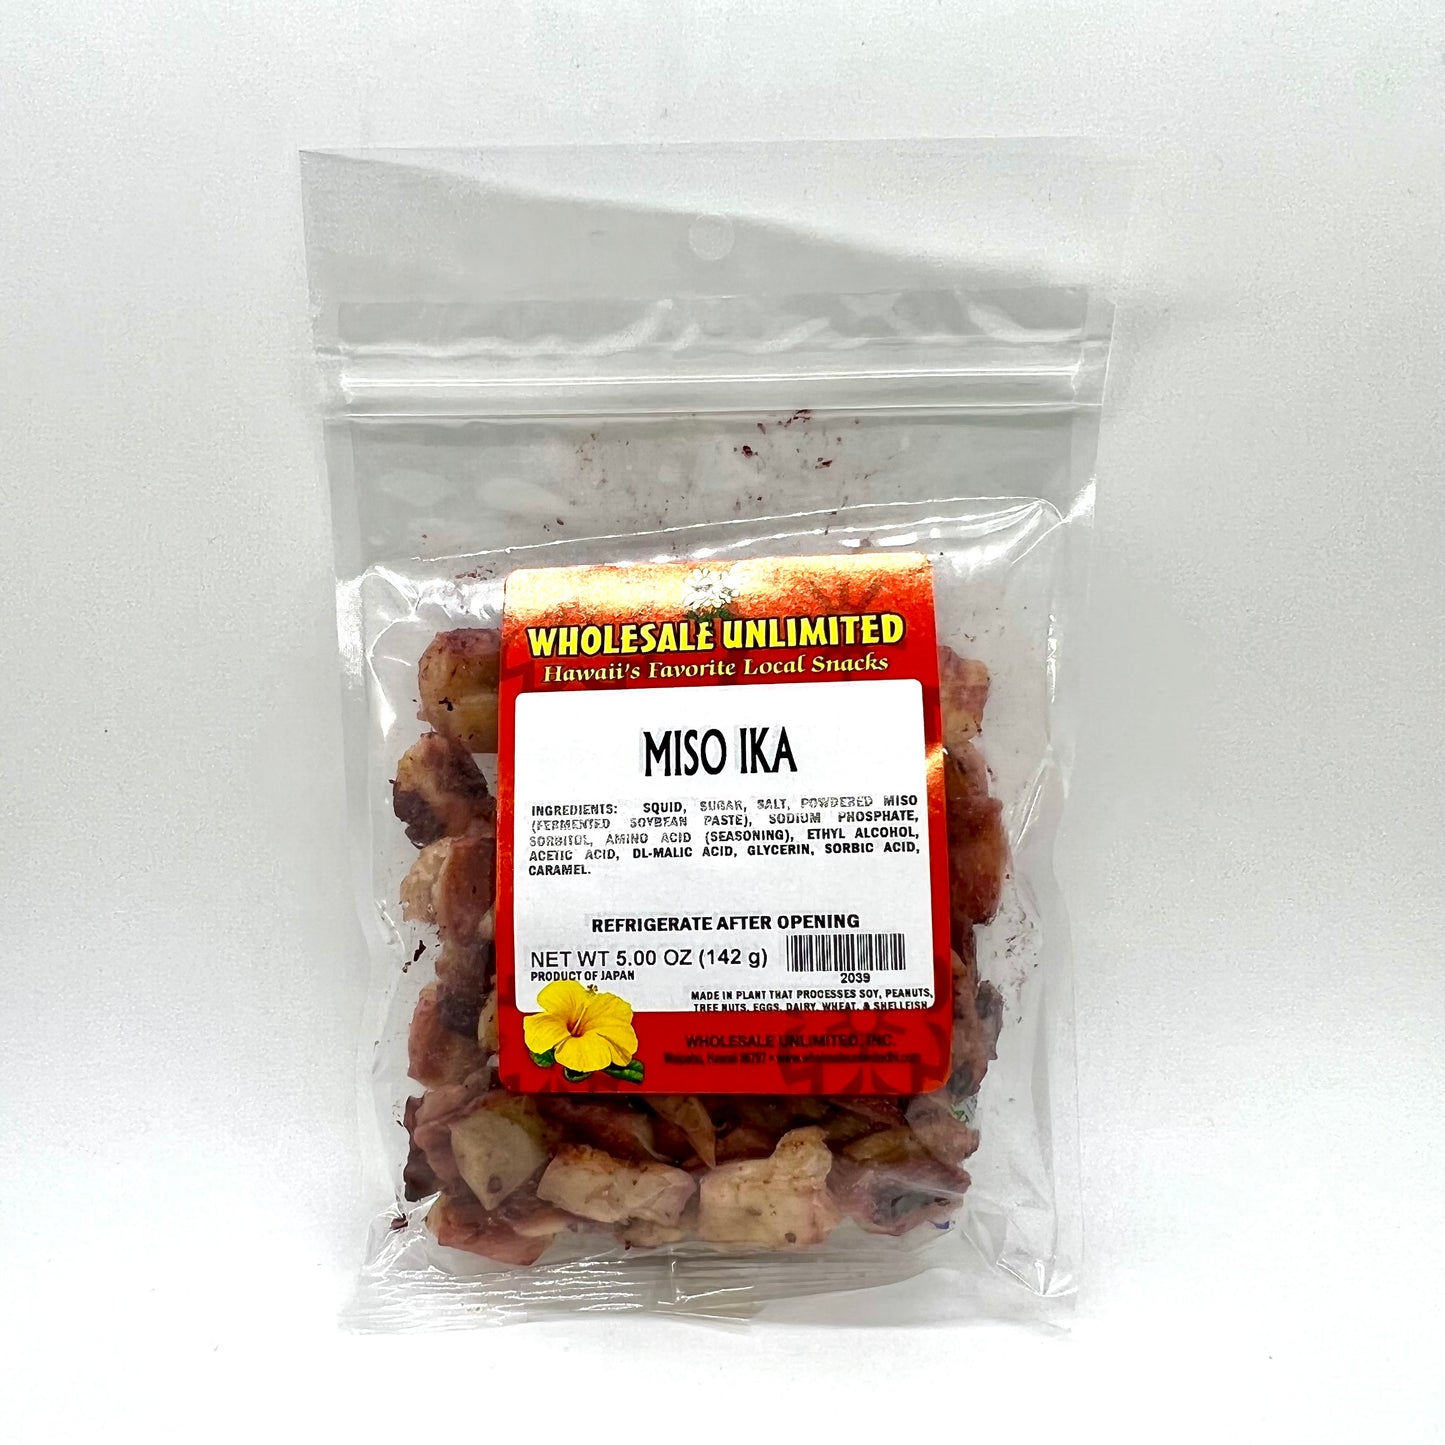 (NEW) Miso Ika - Wholesale Unlimited Inc.